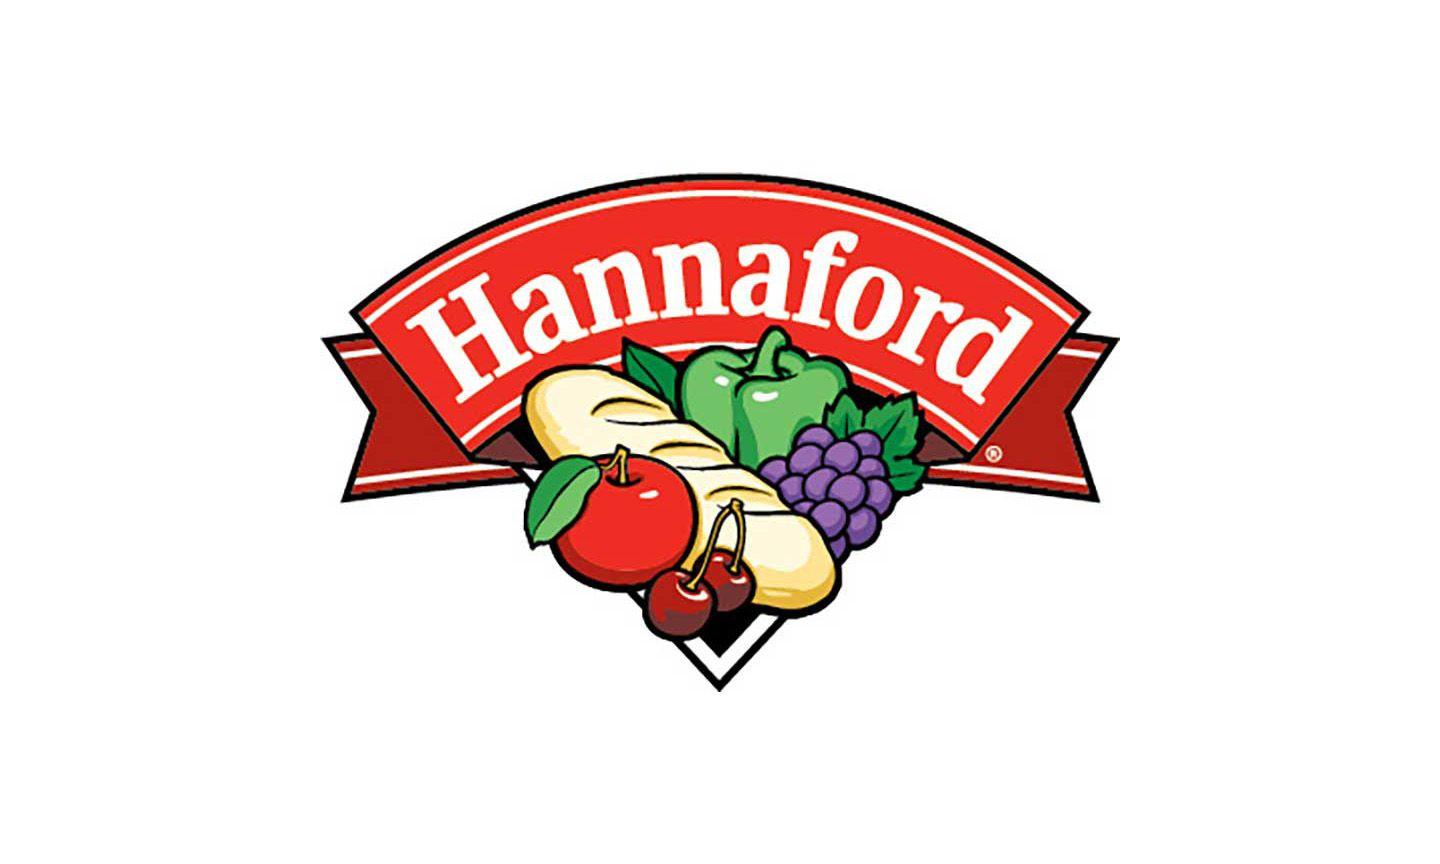 Mechanic Art Logo - Hannaford Bringing Full-Service Store To Mechanic Falls, Maine